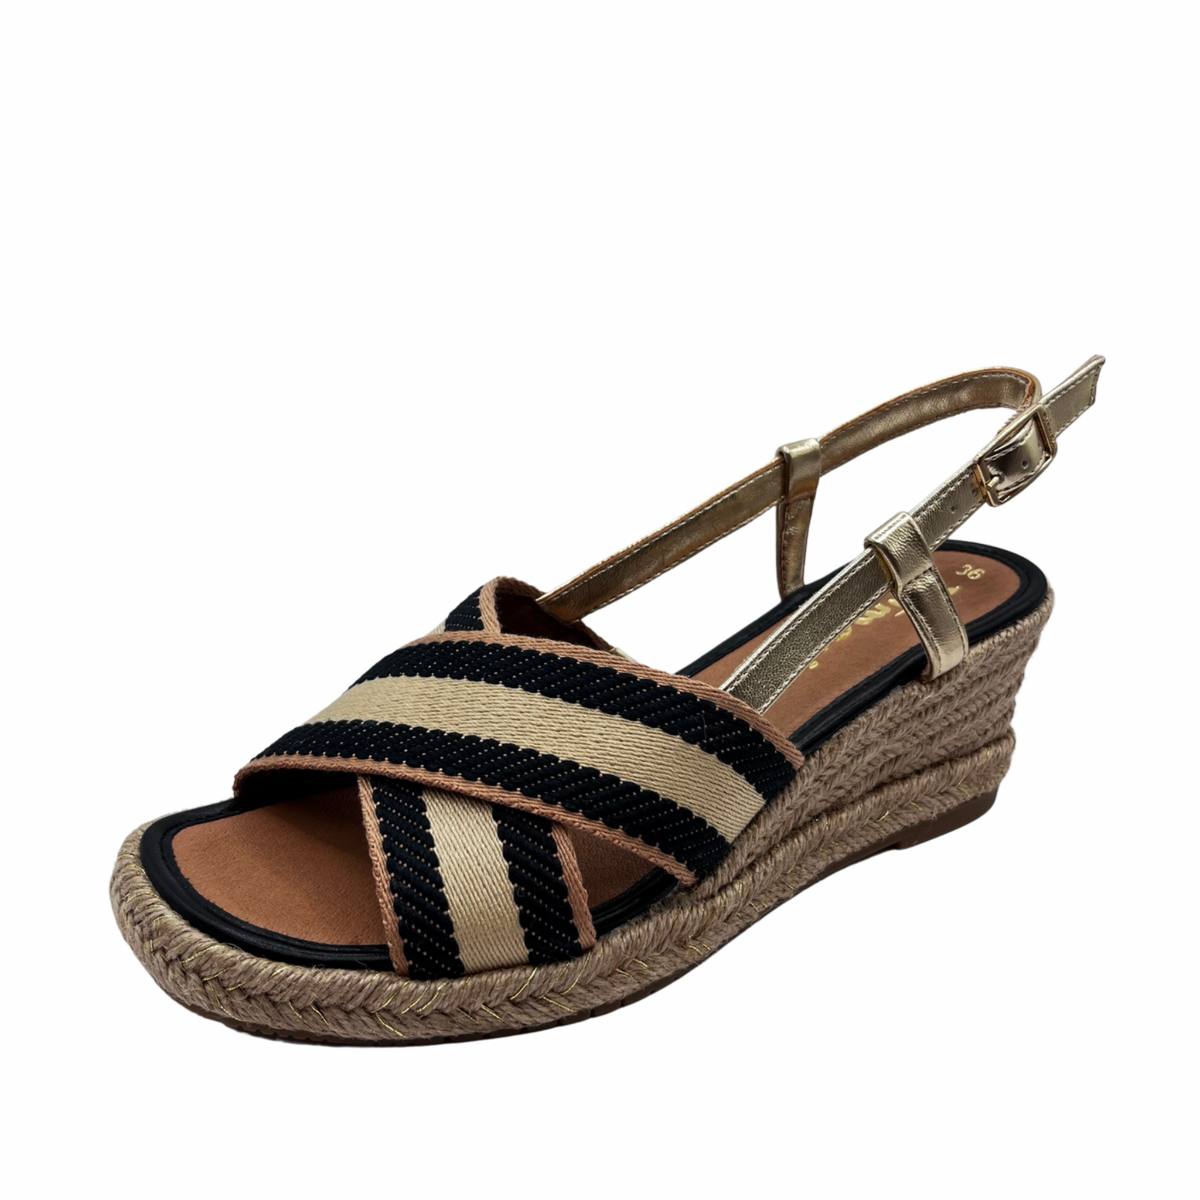 Tamaris Woven and Stripe Design Wedge Sandal